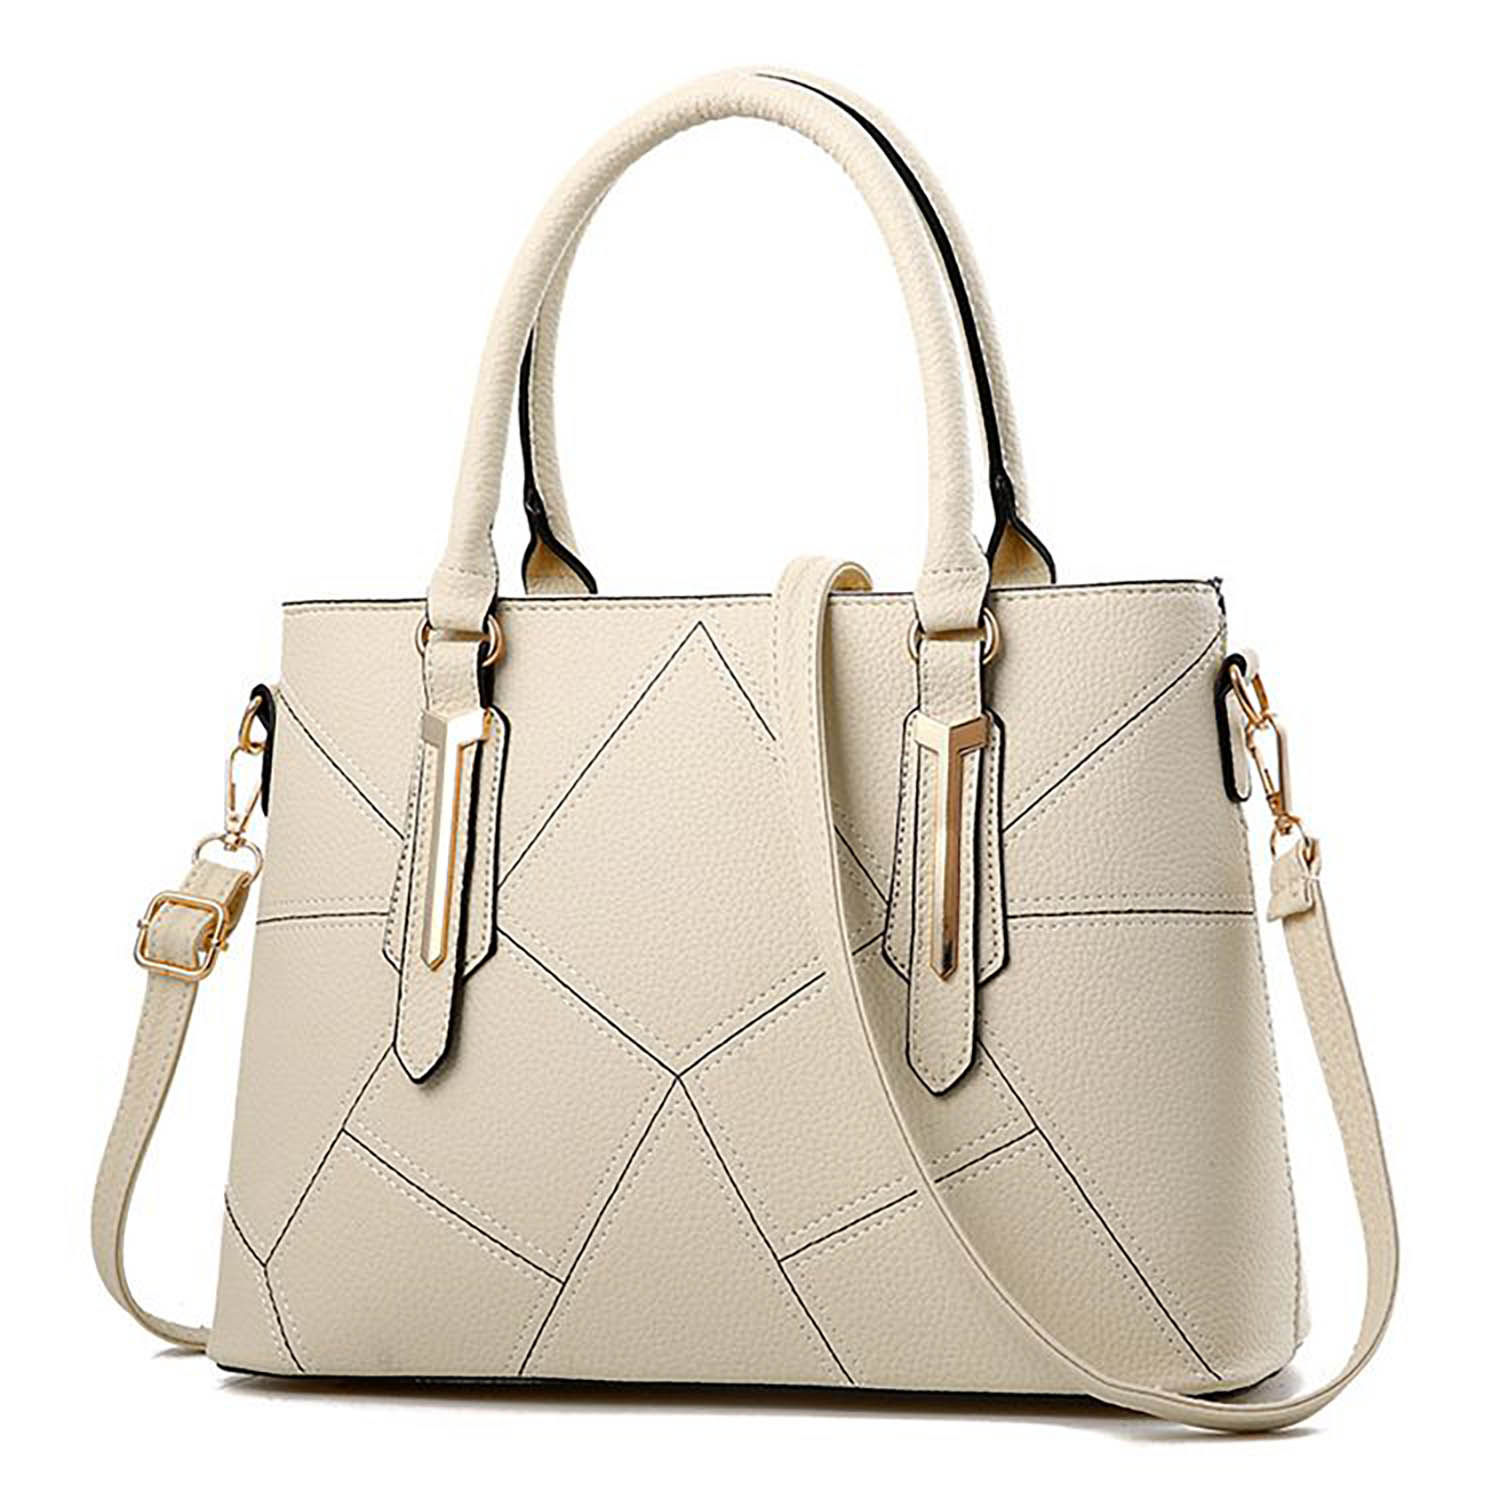 Handtasche Shopper Tragetasche trendige Umhängetasche Damen stylisches Gitter Muster Gold Applikationen Crossbody